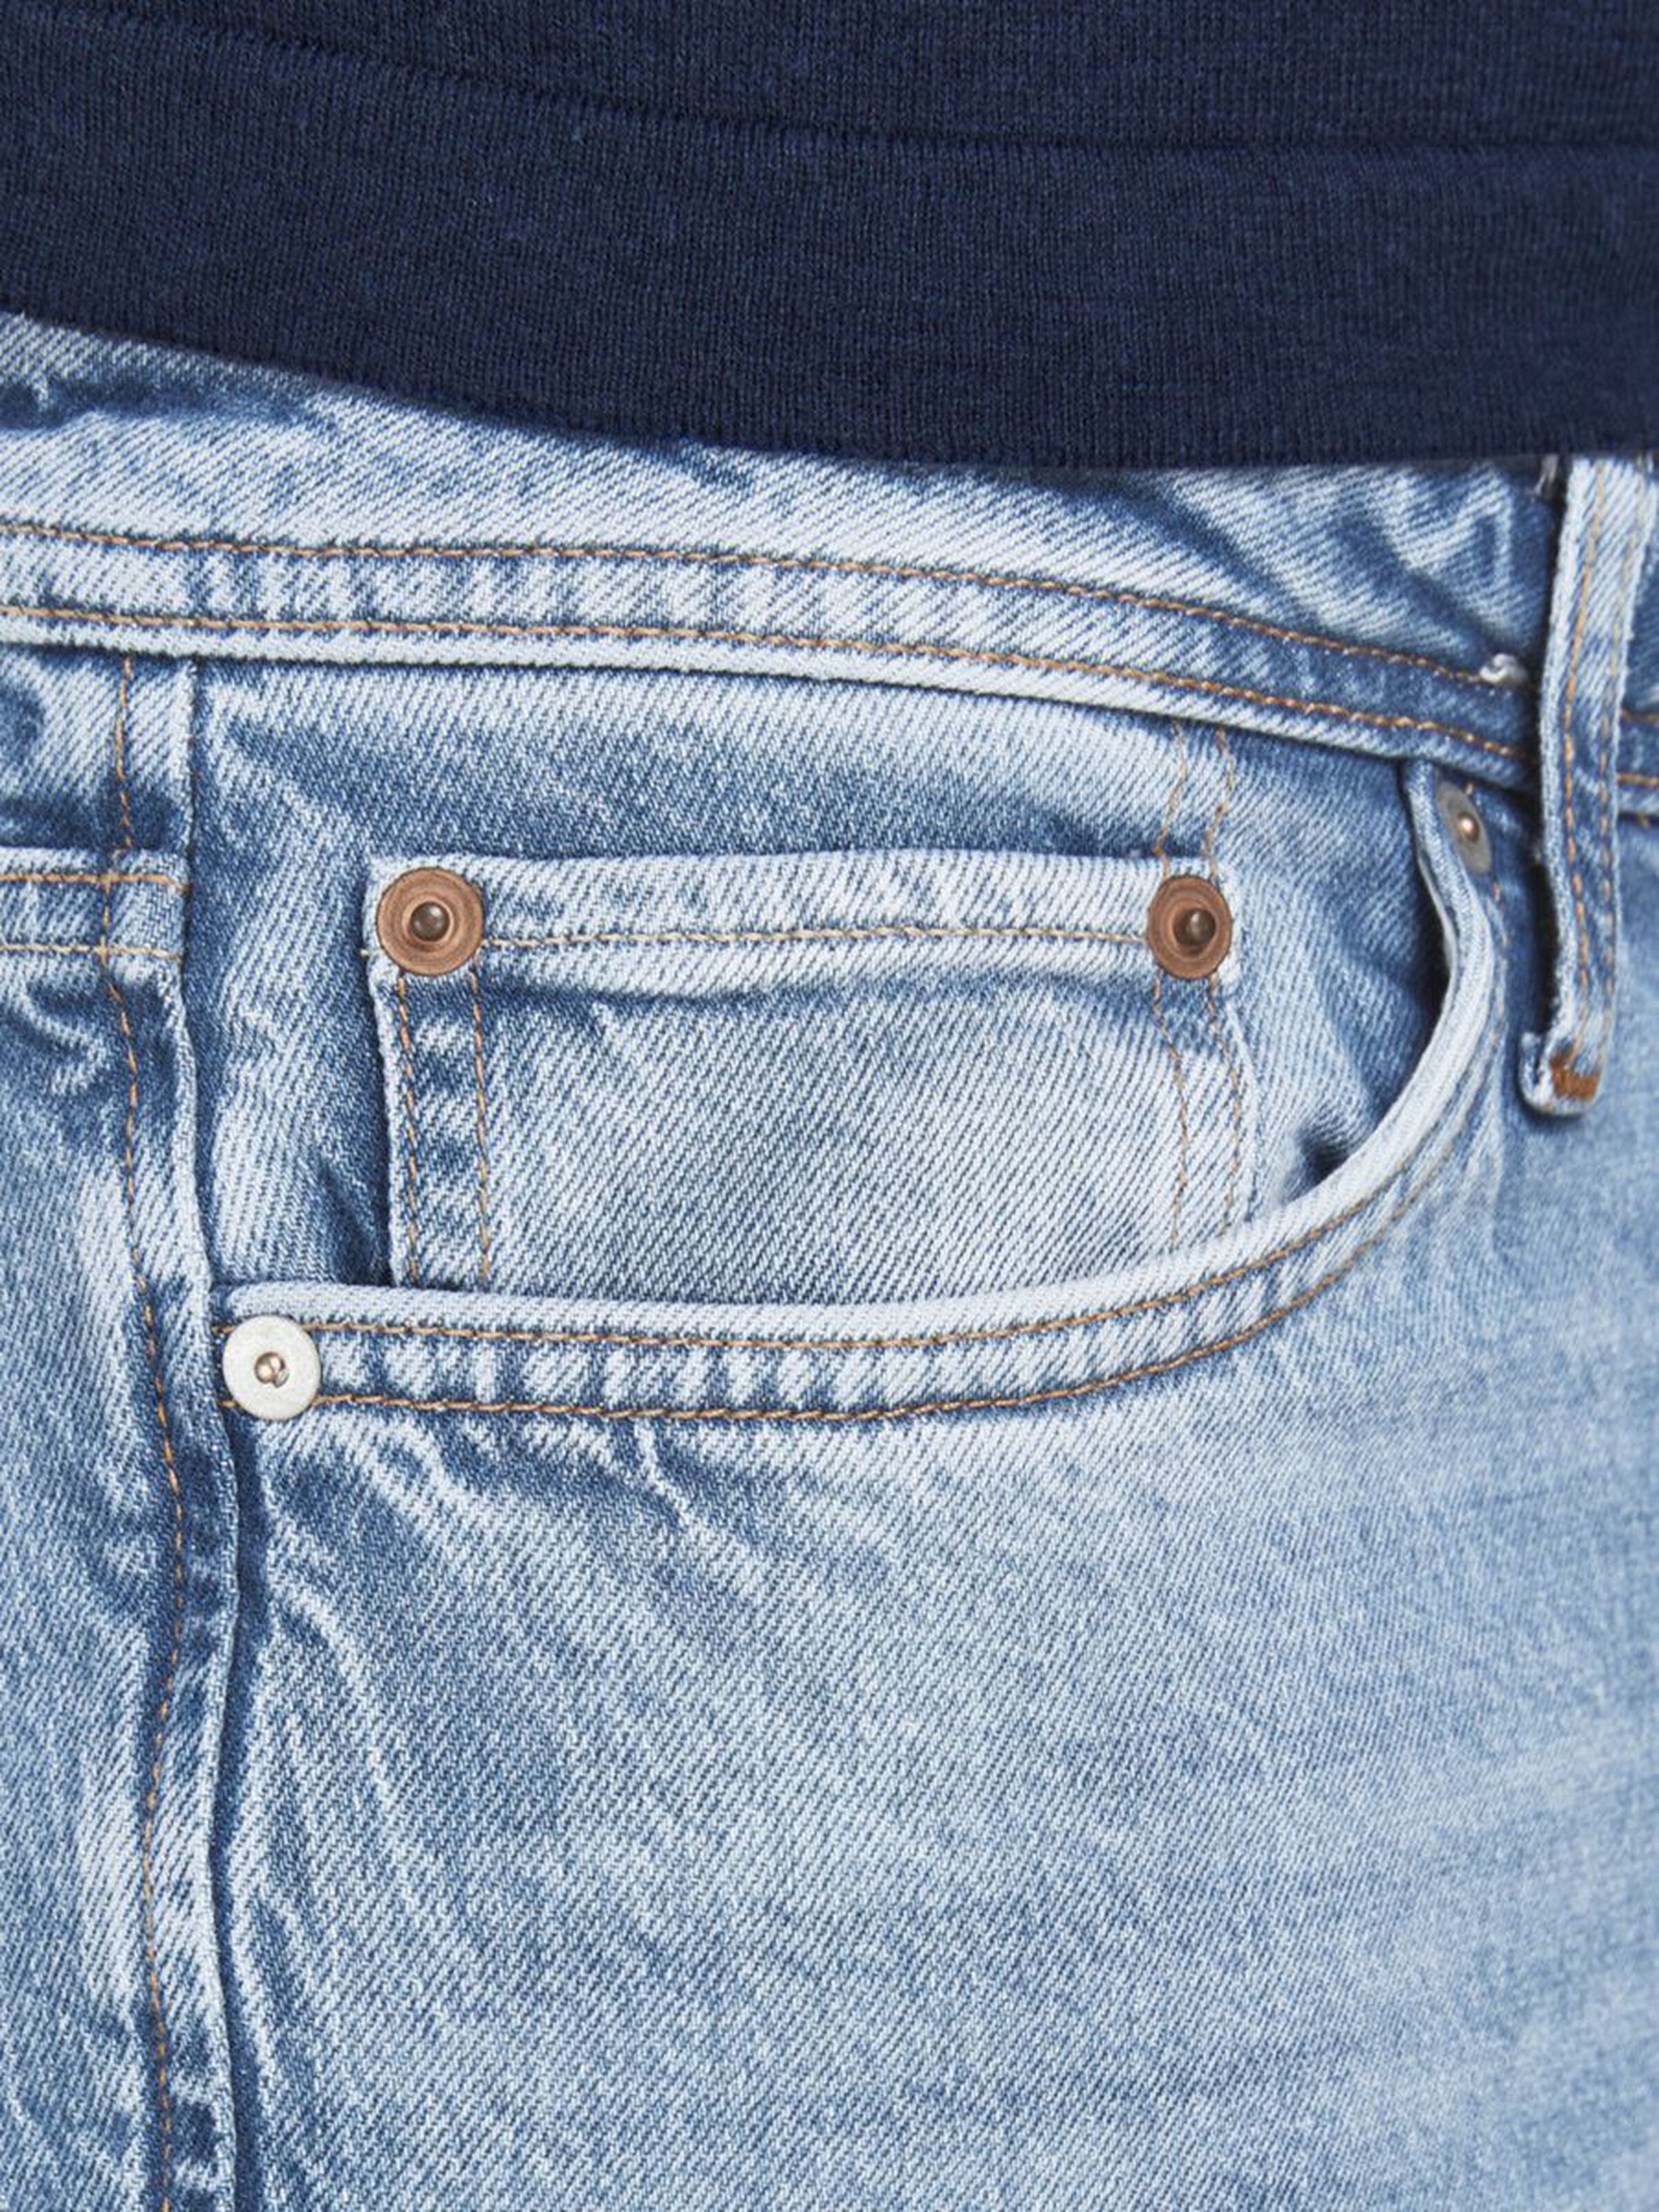 clark original cj 715 regular fit jeans - blue